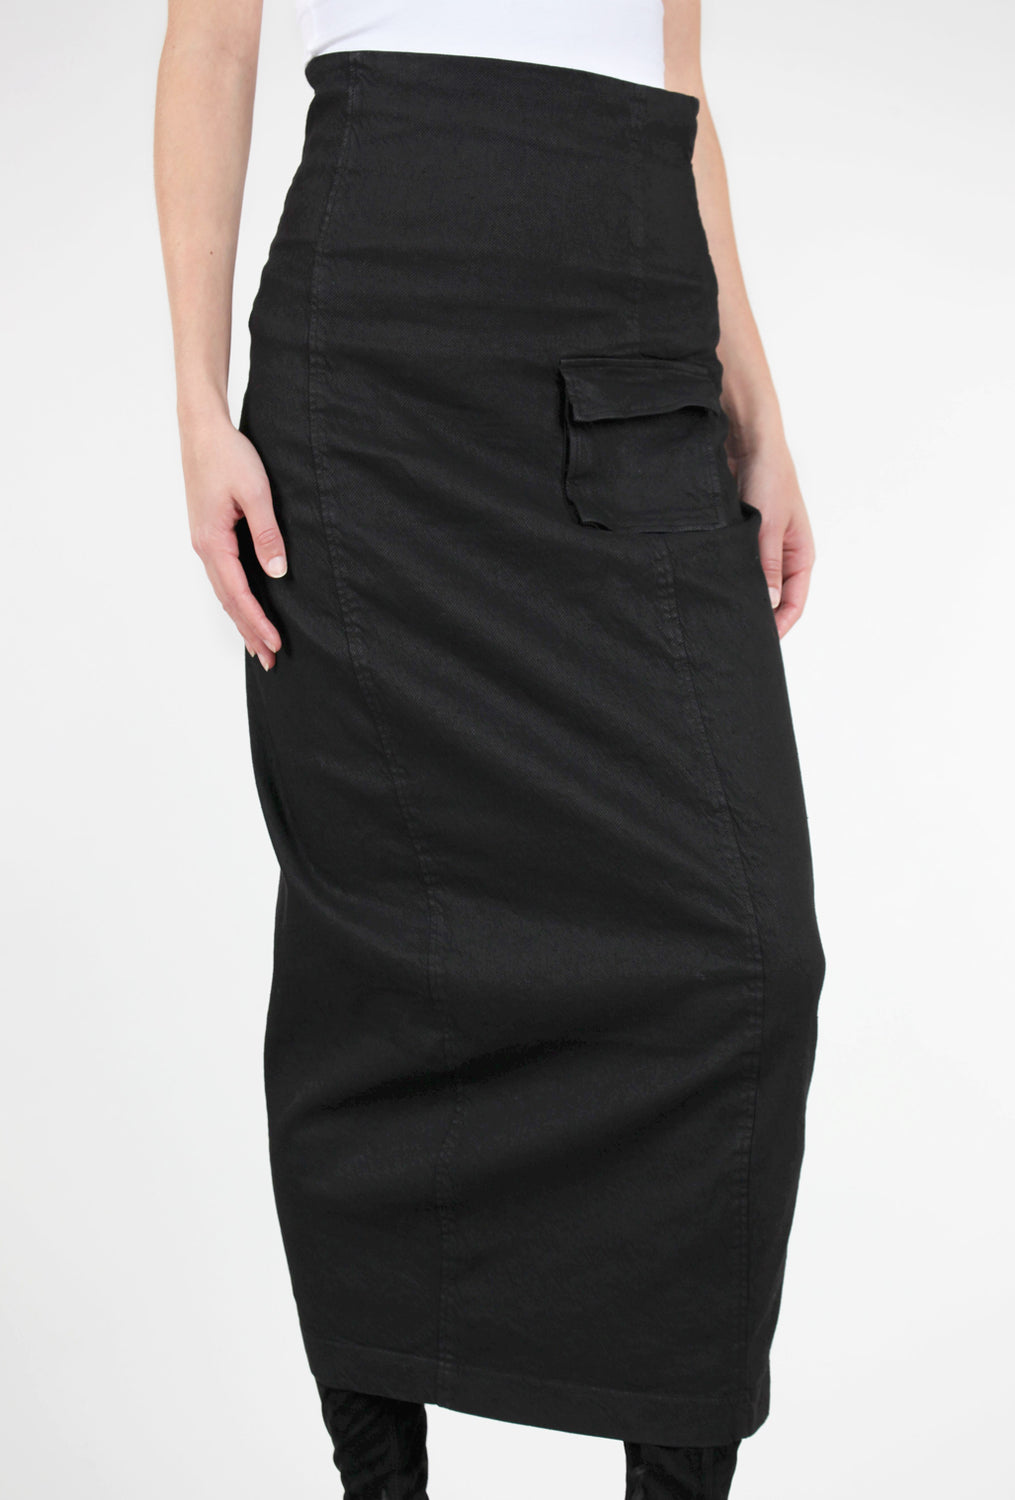 Rundholz Texture Twill Roll Waist Skirt, Black 